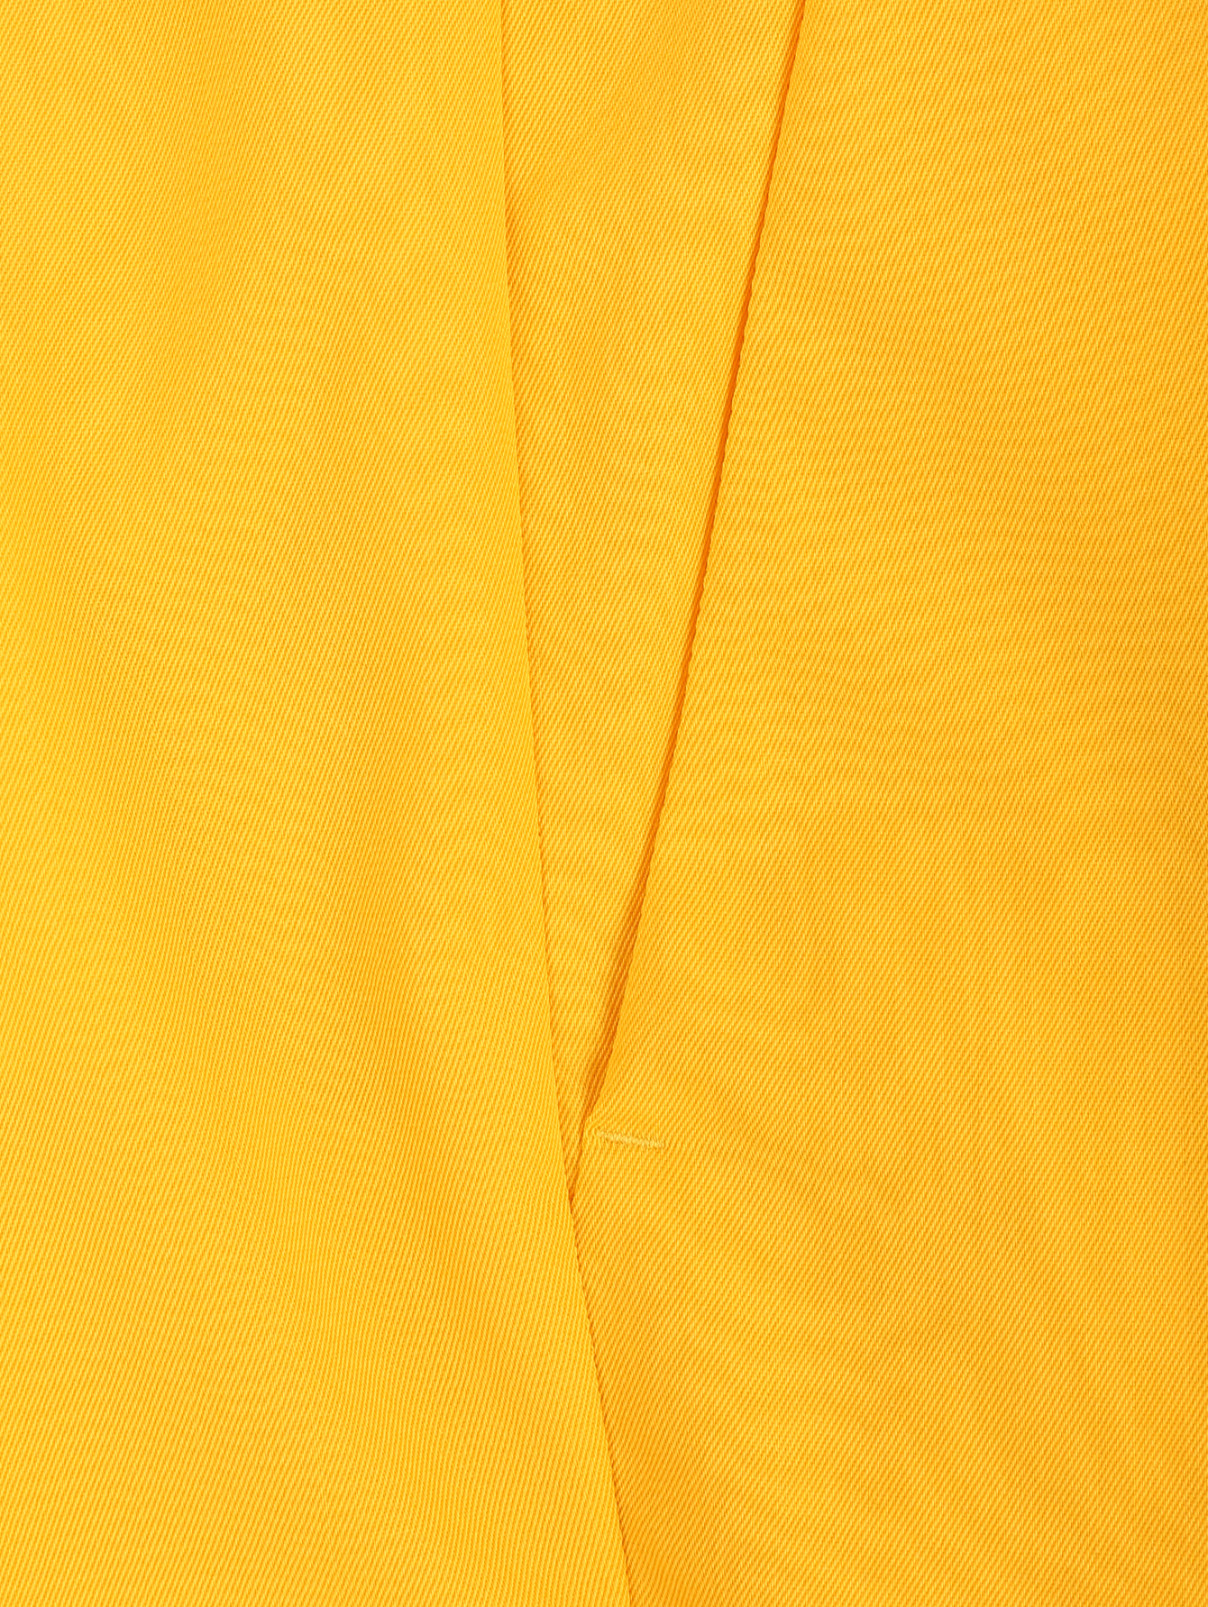 Брюки зауженного кроя из шерсти Moschino Cheap&Chic  –  Деталь  – Цвет:  Желтый